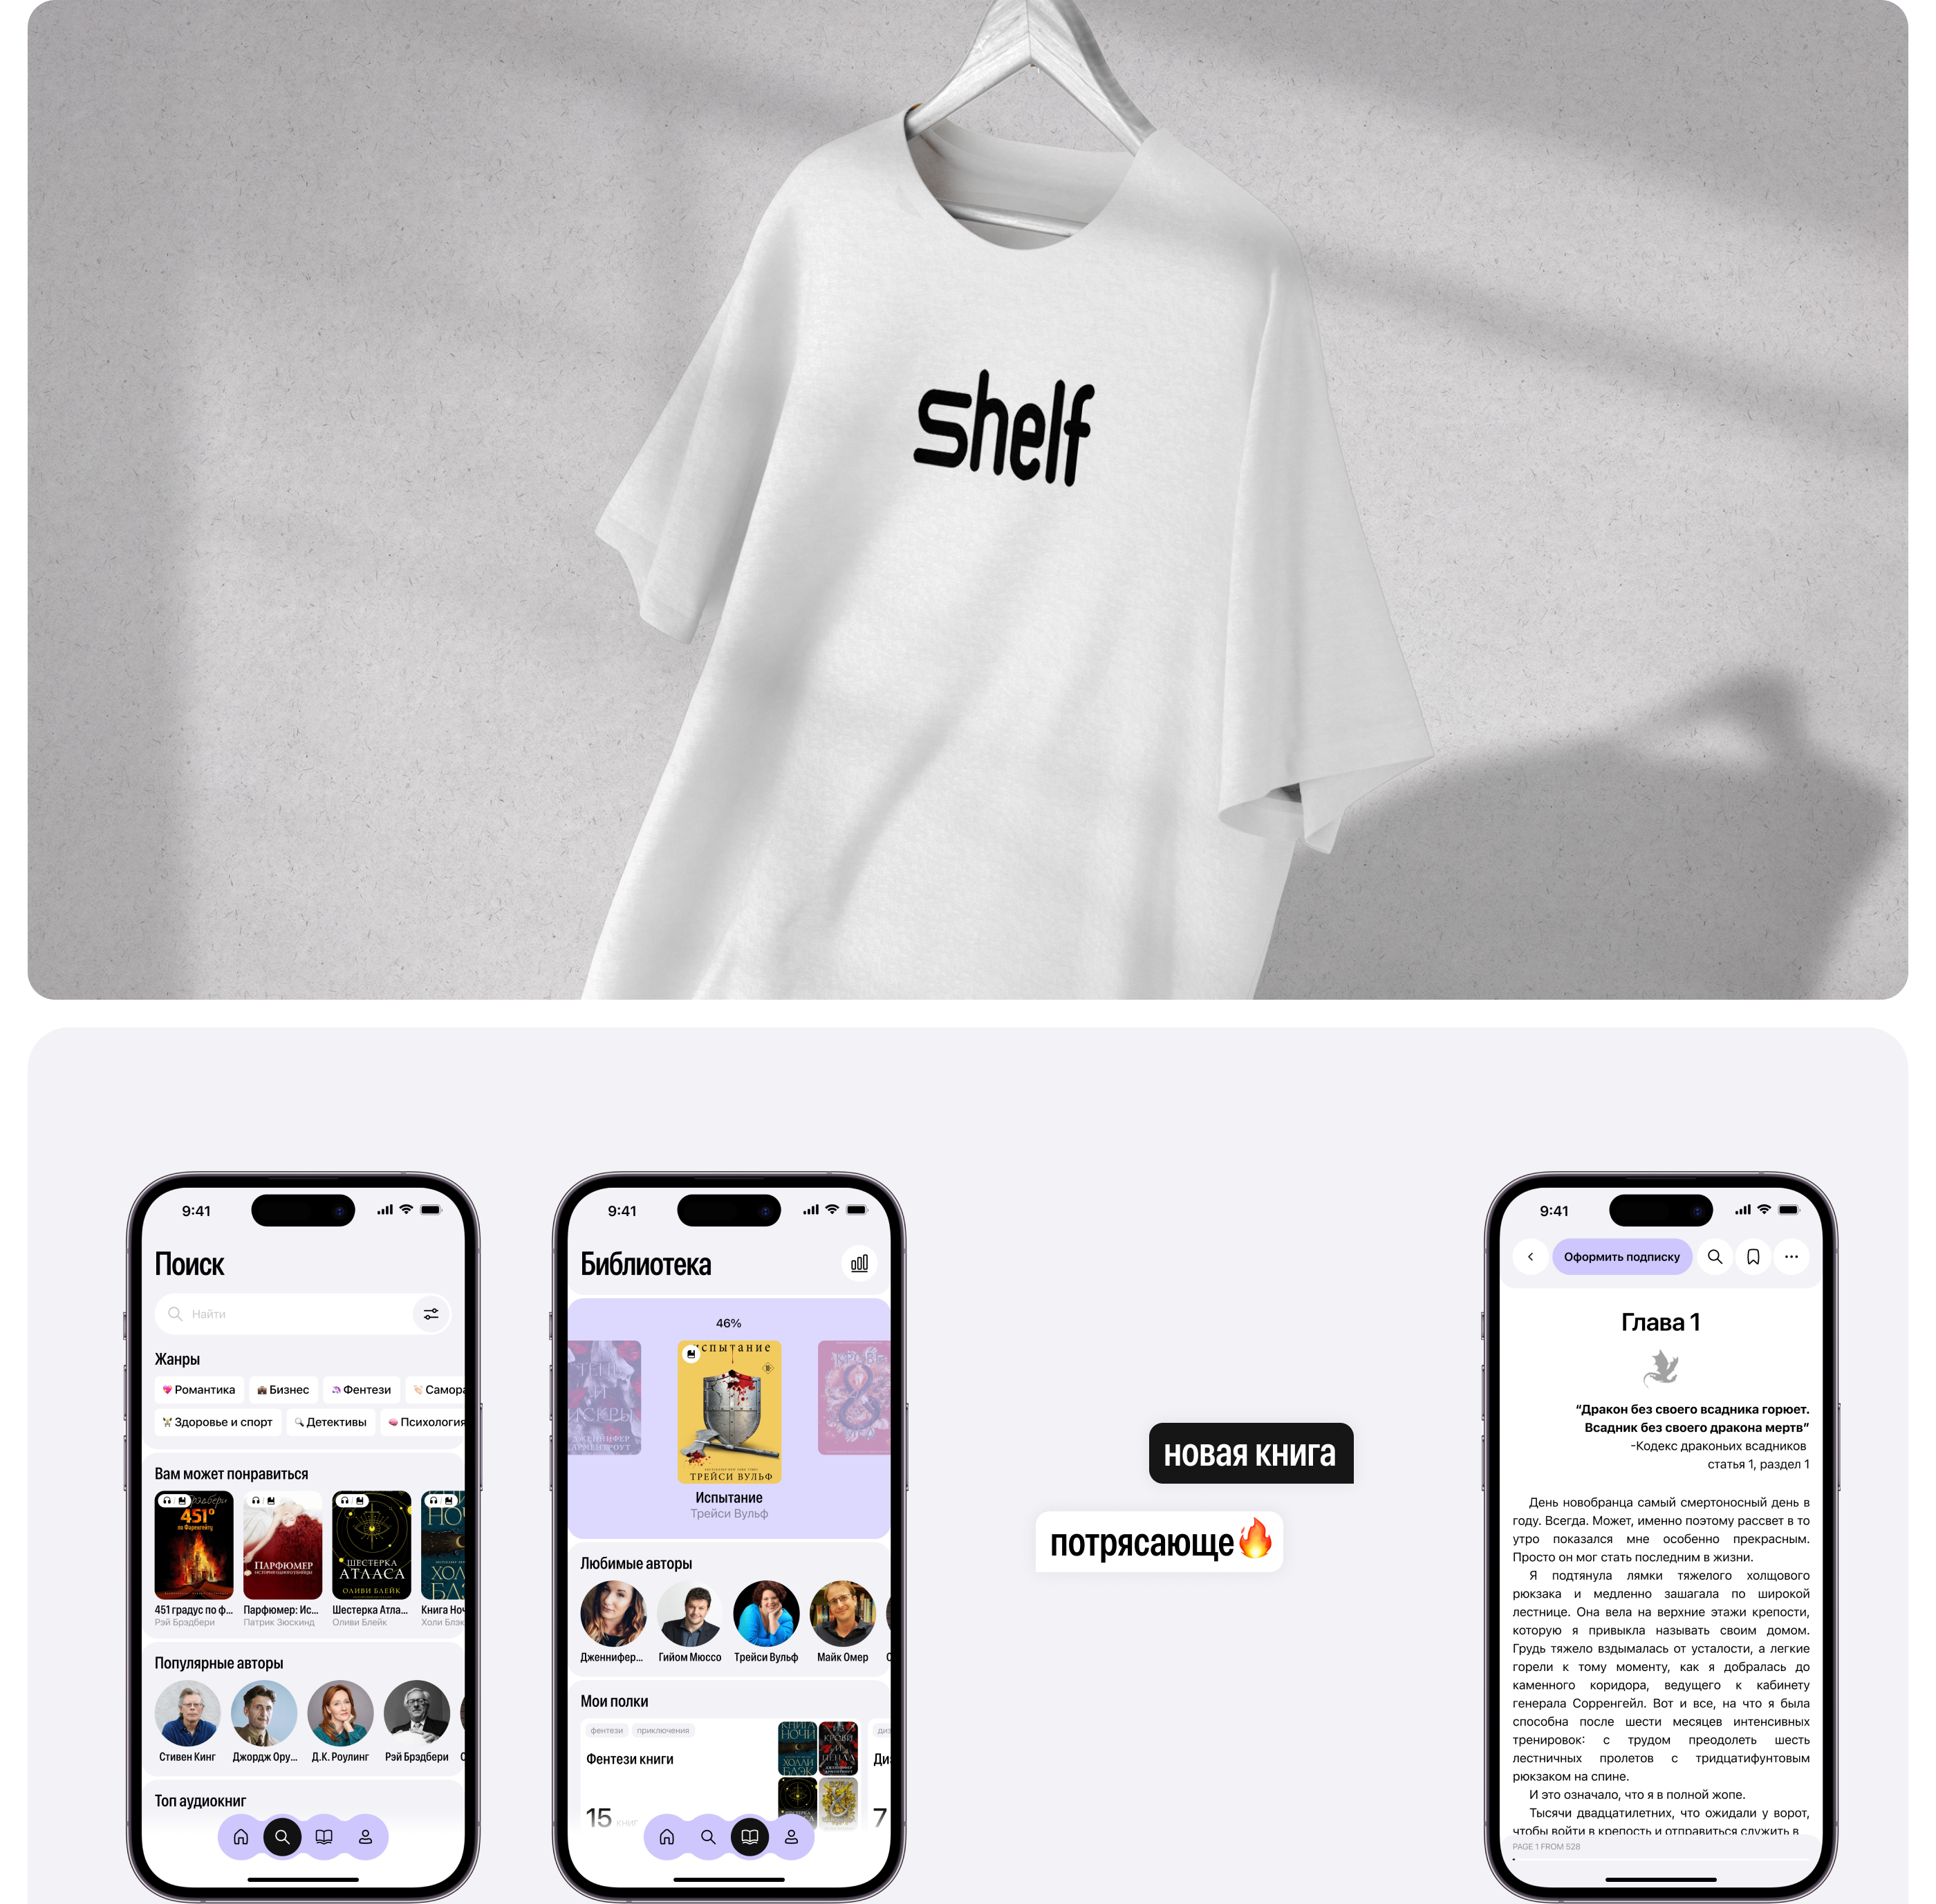 Shelf — Изображение №6 — Интерфейсы, Брендинг на Dprofile